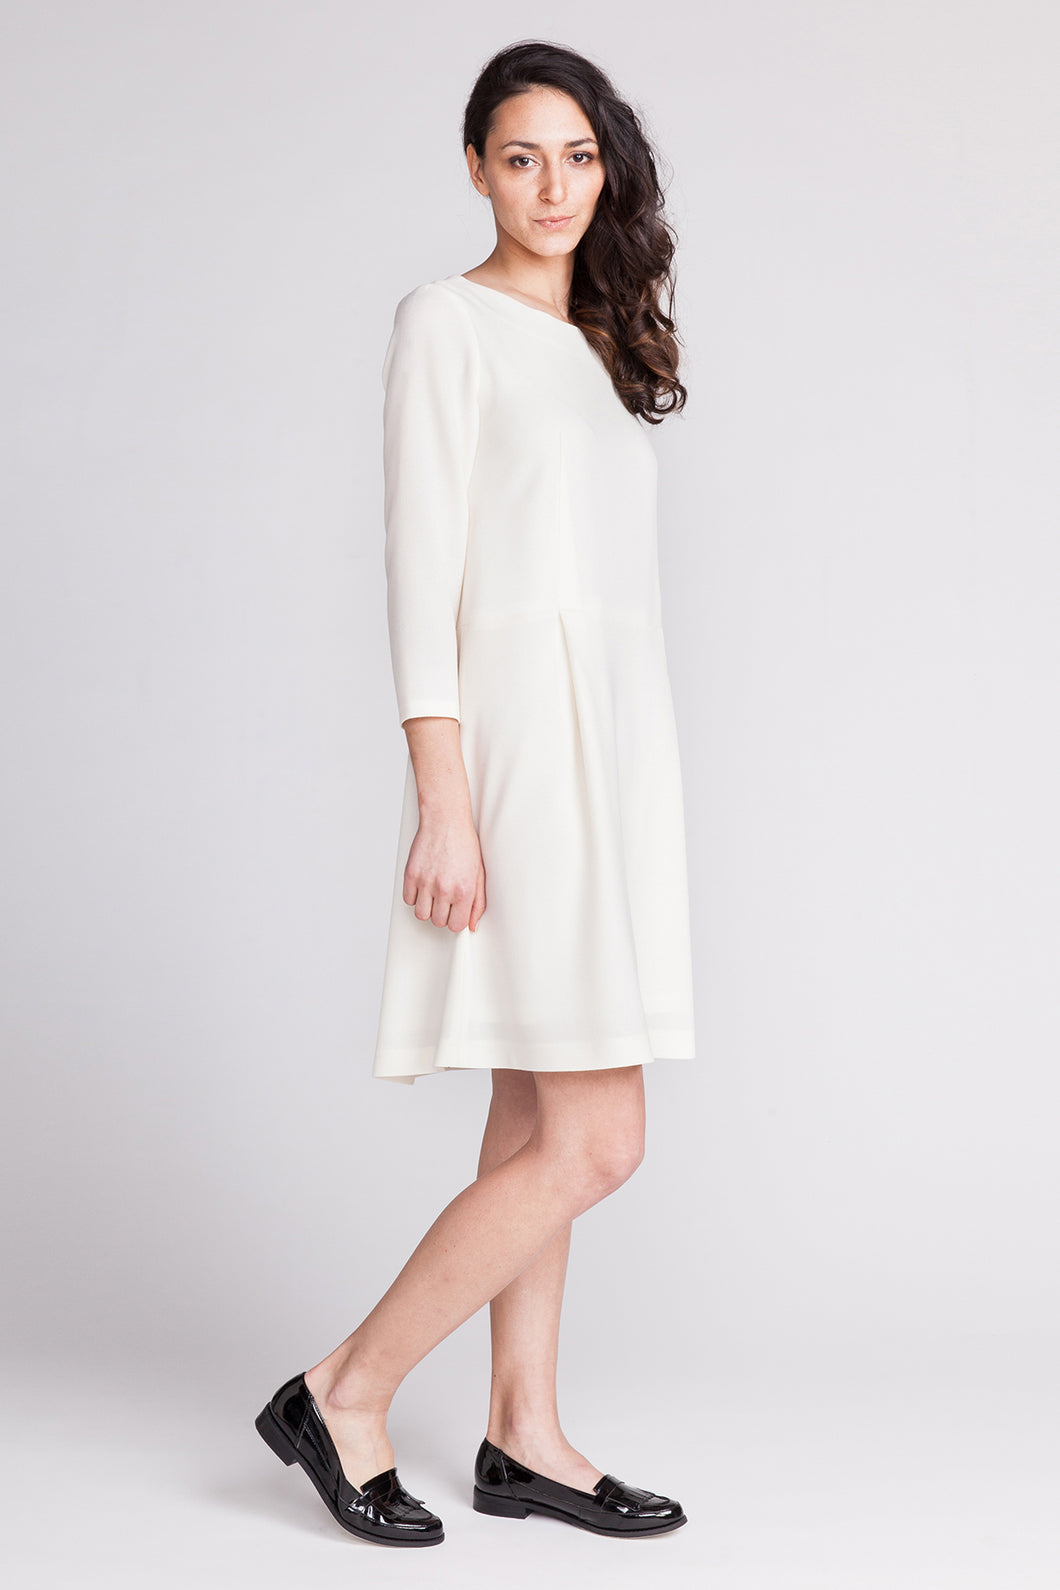 Named Clothing - LEXI A-Line Dress